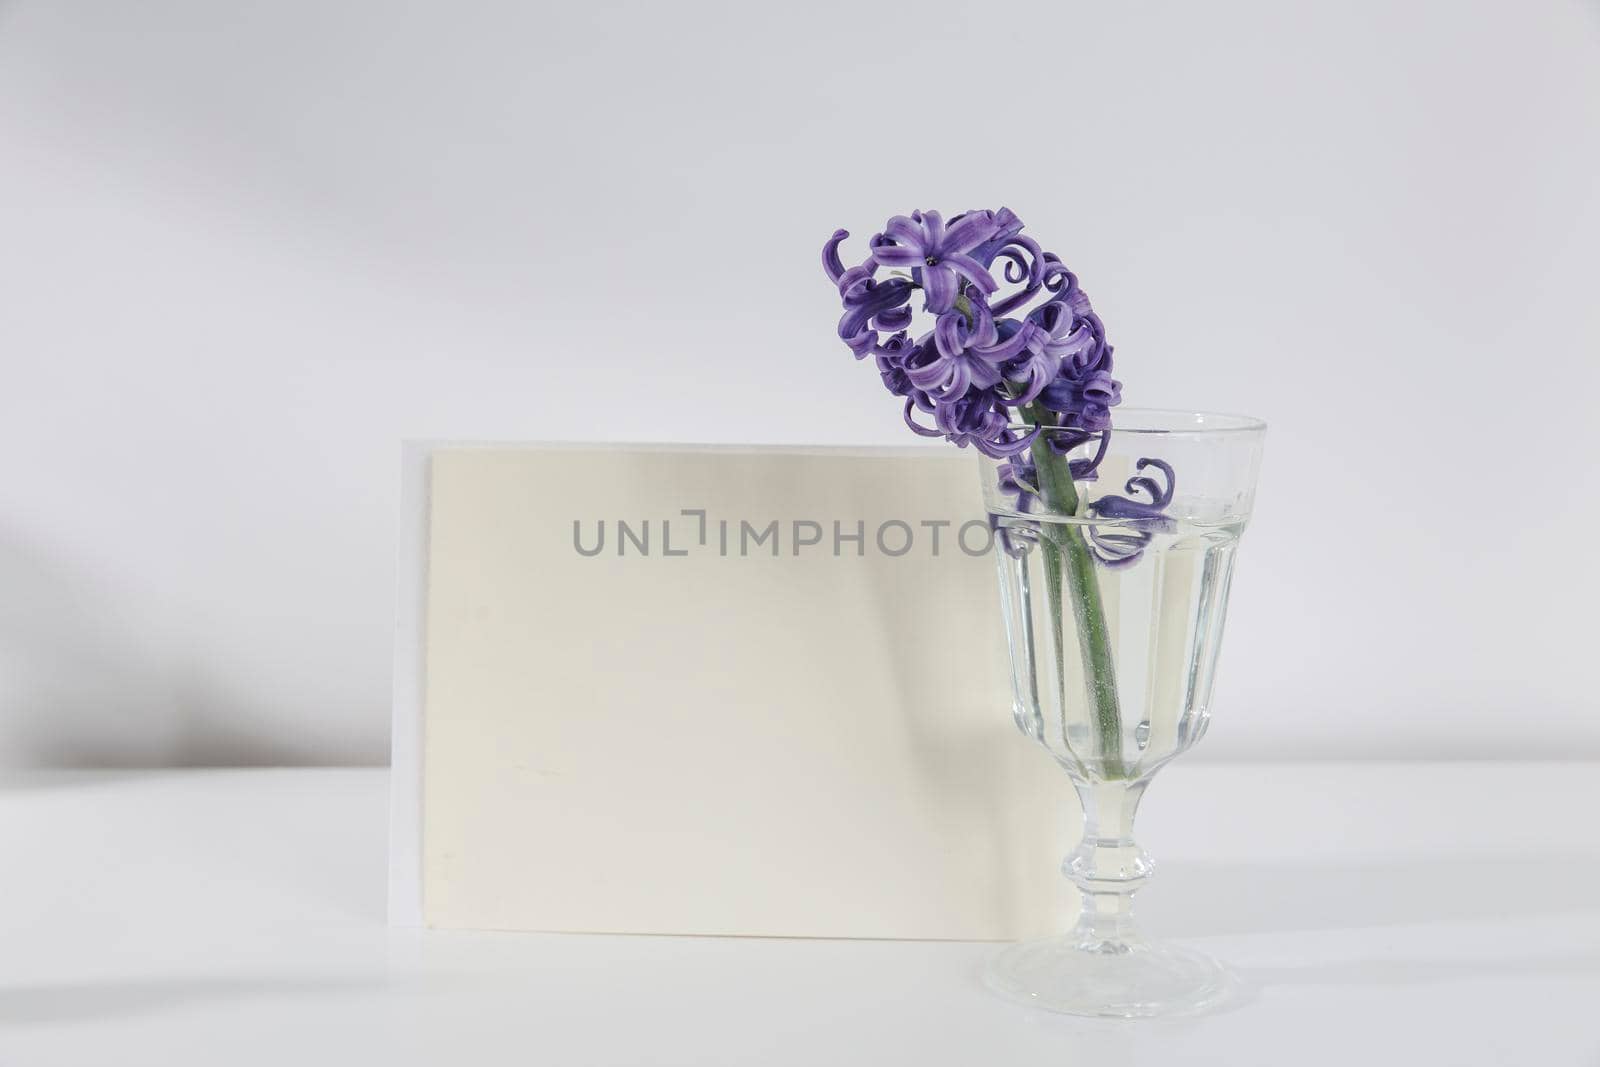 Blank wedding invitation stationery card mockup with envelope on white background with hyacinth flowers, feminine blog. Valentines day card, valentines day background, mothers day